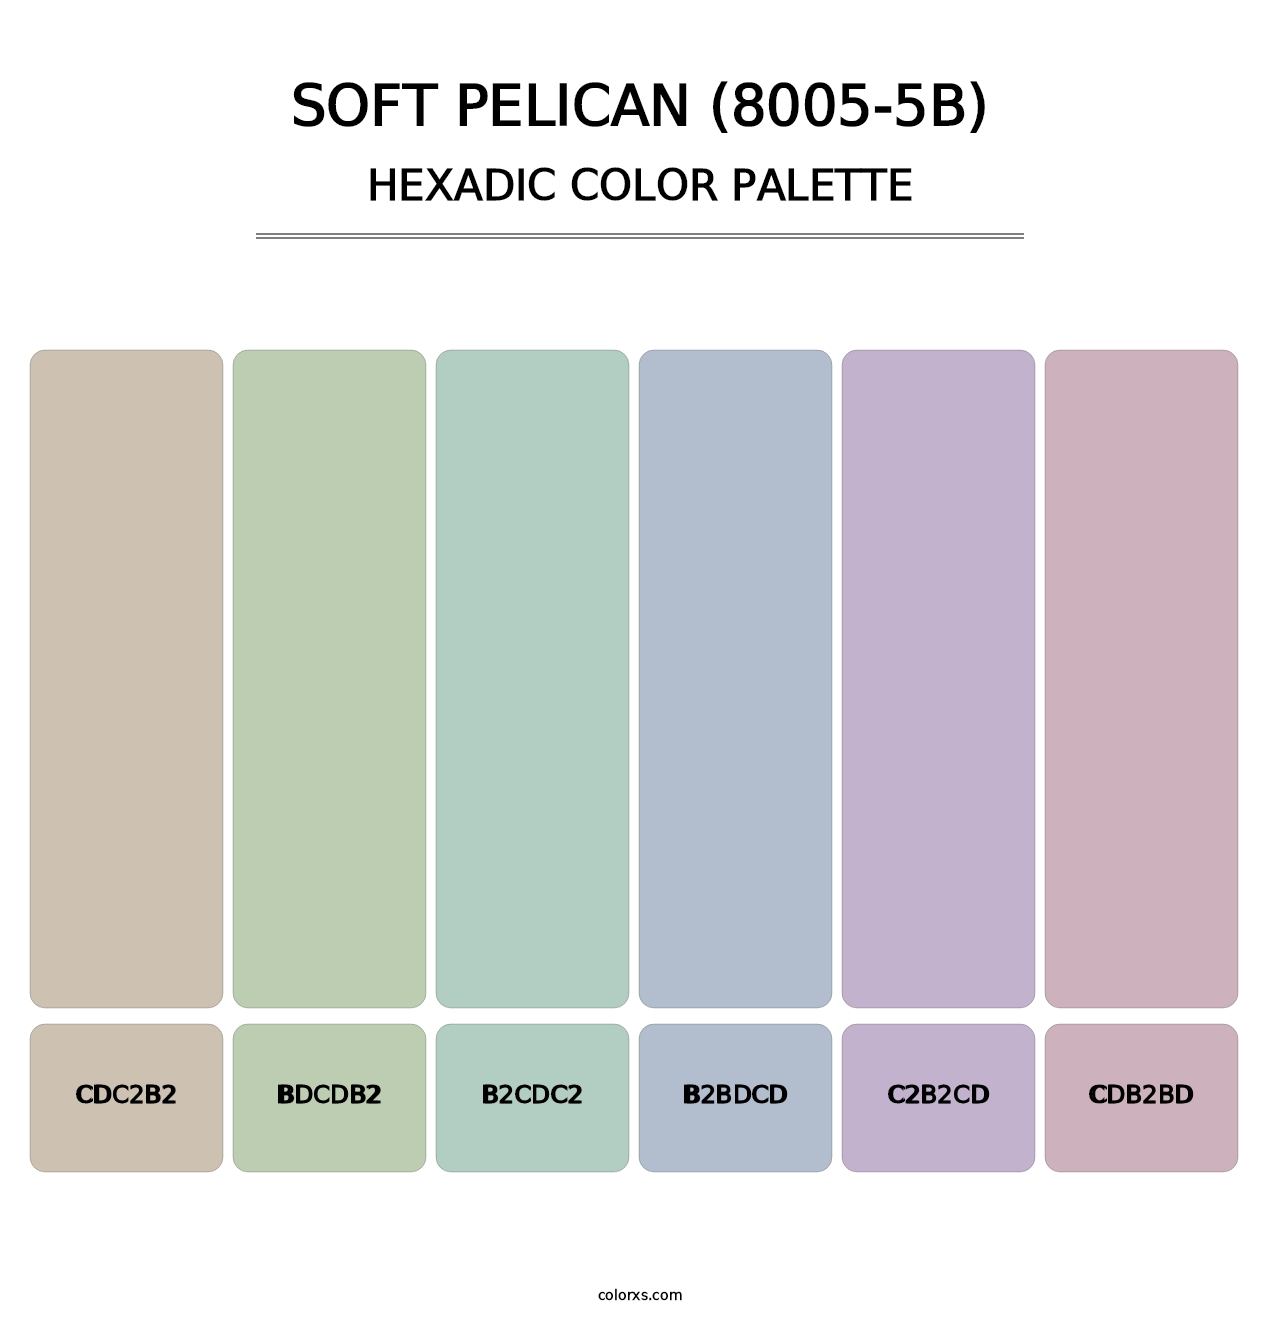 Soft Pelican (8005-5B) - Hexadic Color Palette